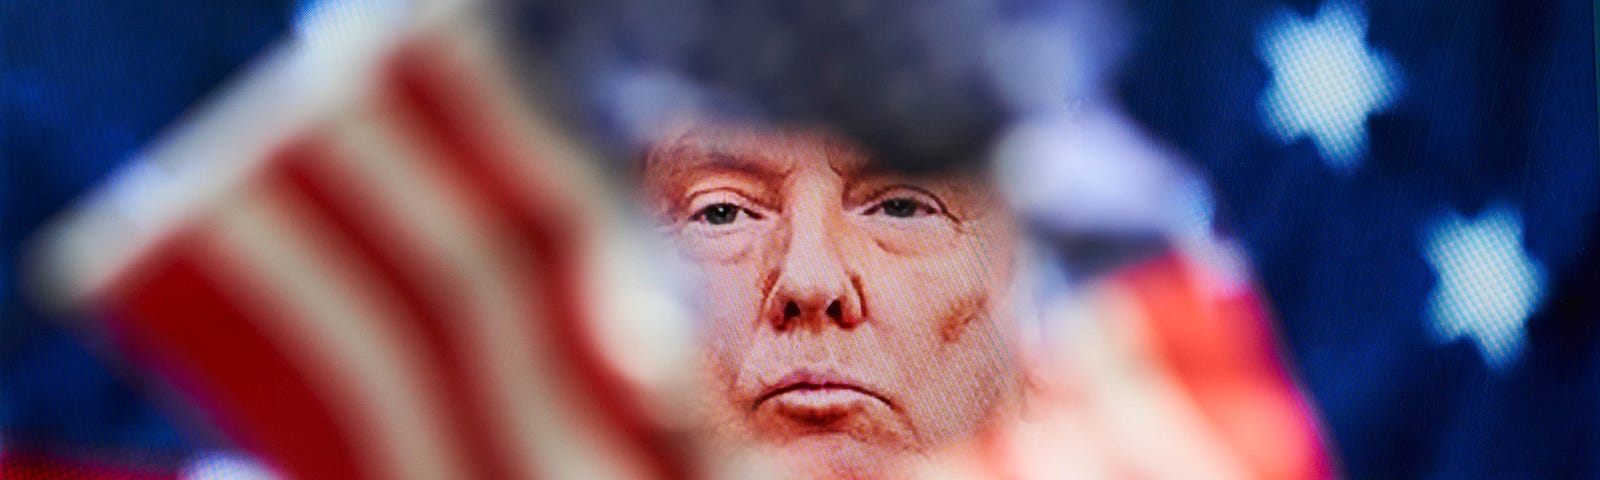 US President Donald Trump’s face shown through a torn US flag